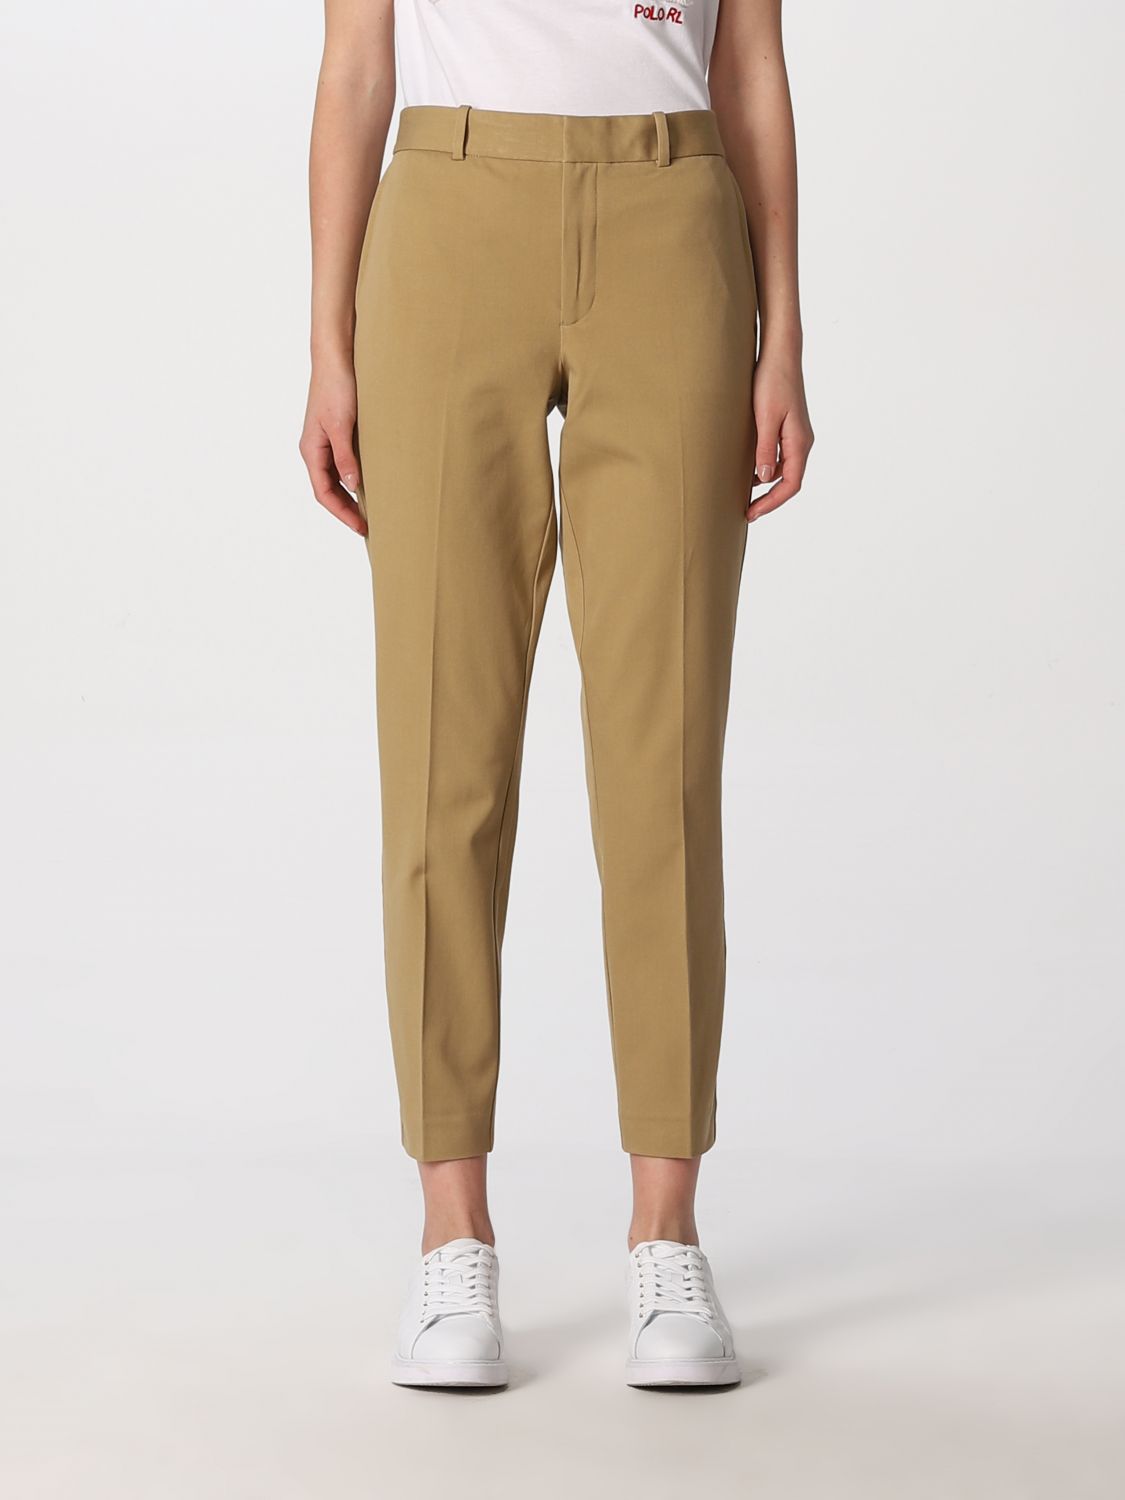 POLO RALPH LAUREN: pants for woman - Beige | Polo Ralph Lauren 